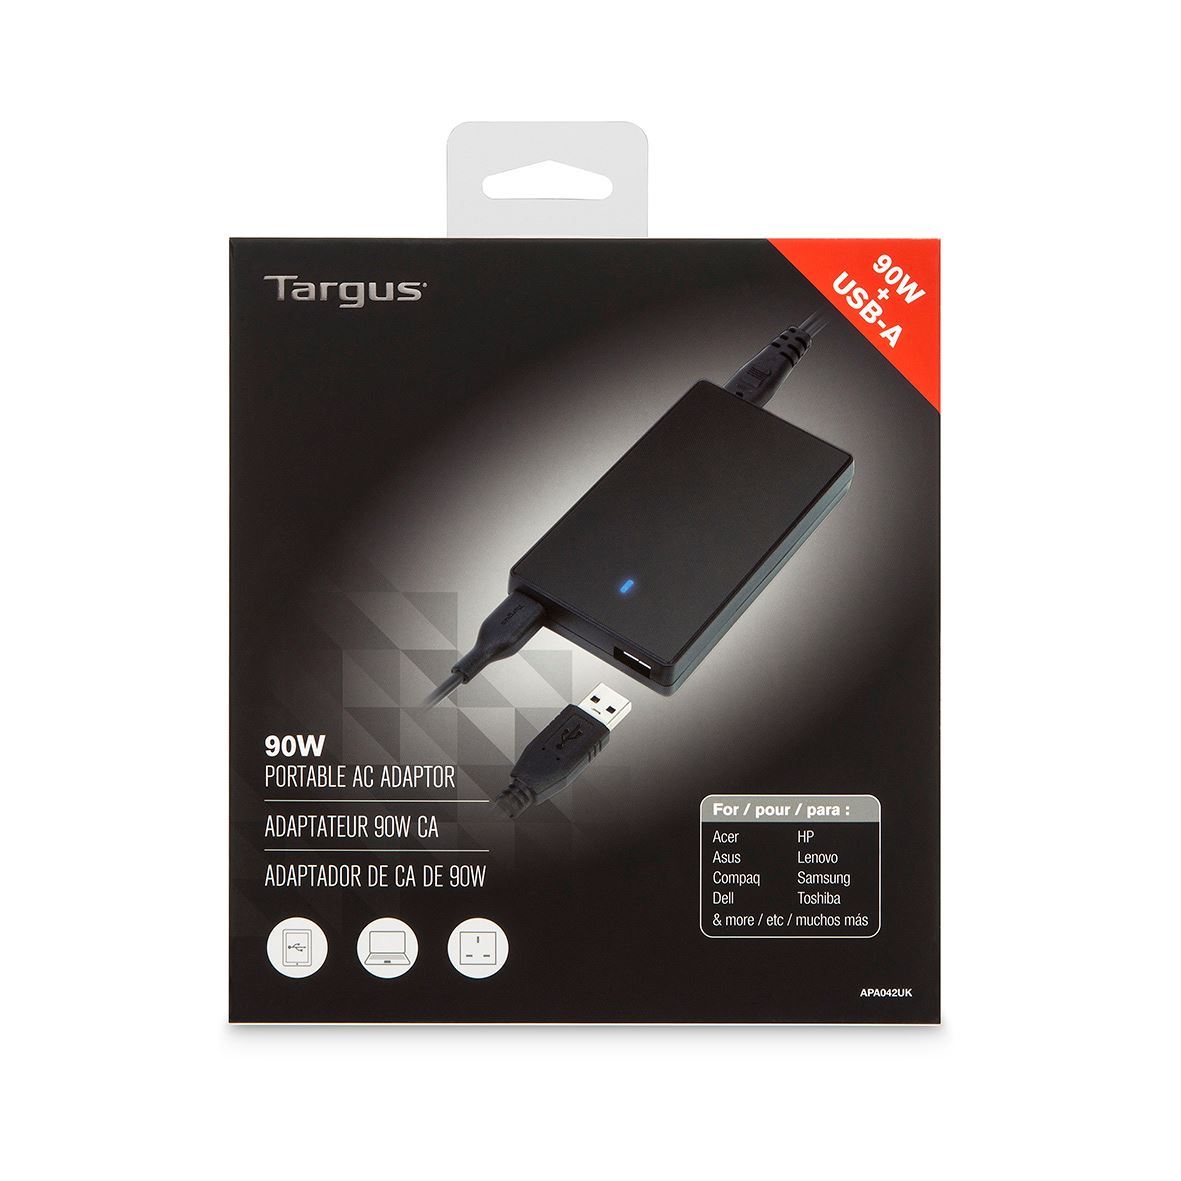 Targus AC Compact Laptop Charger & USB Tablet Charger APA042UK - Black